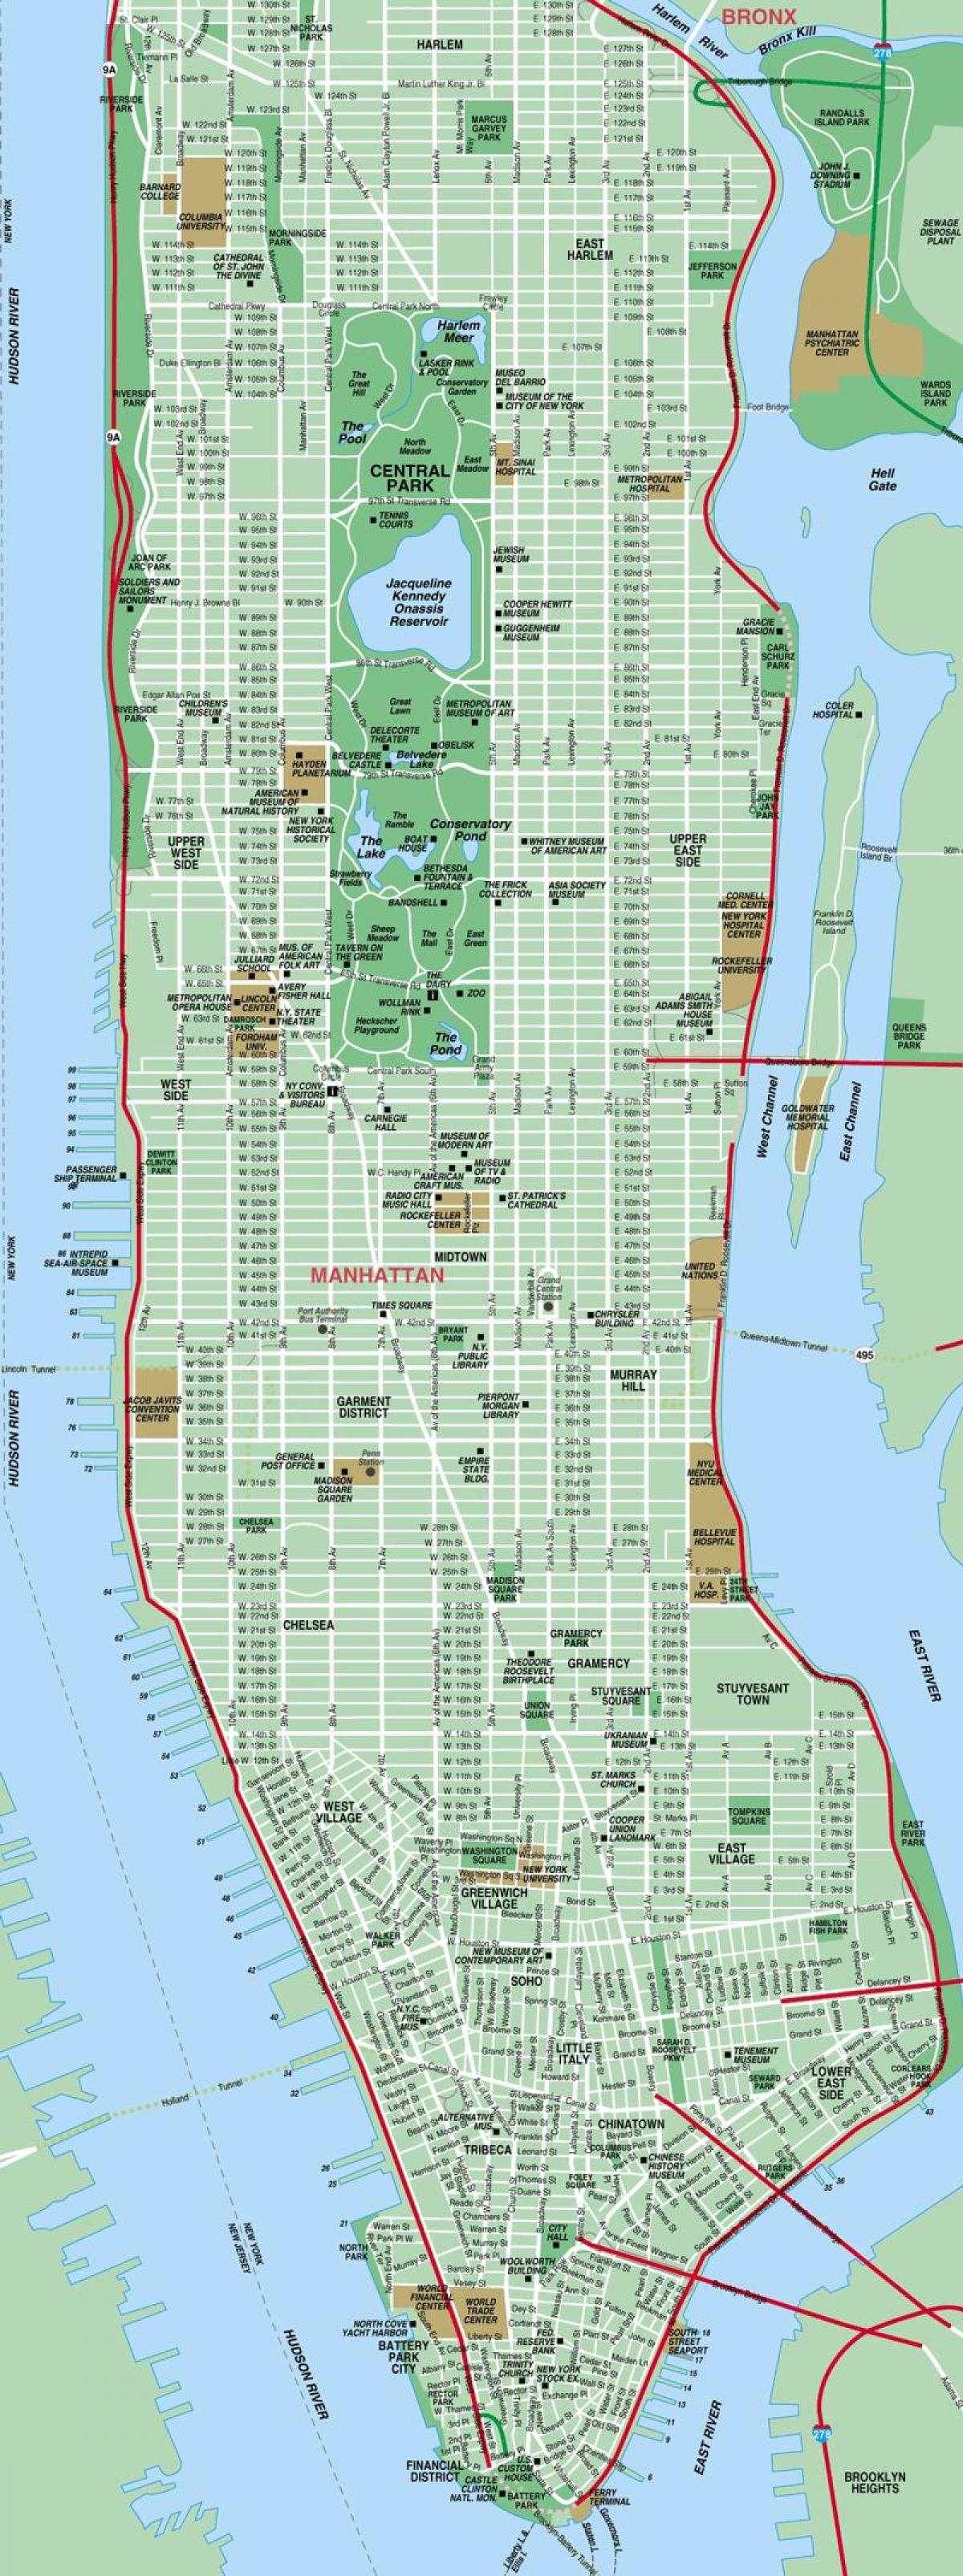 Менхетн патишта мапа